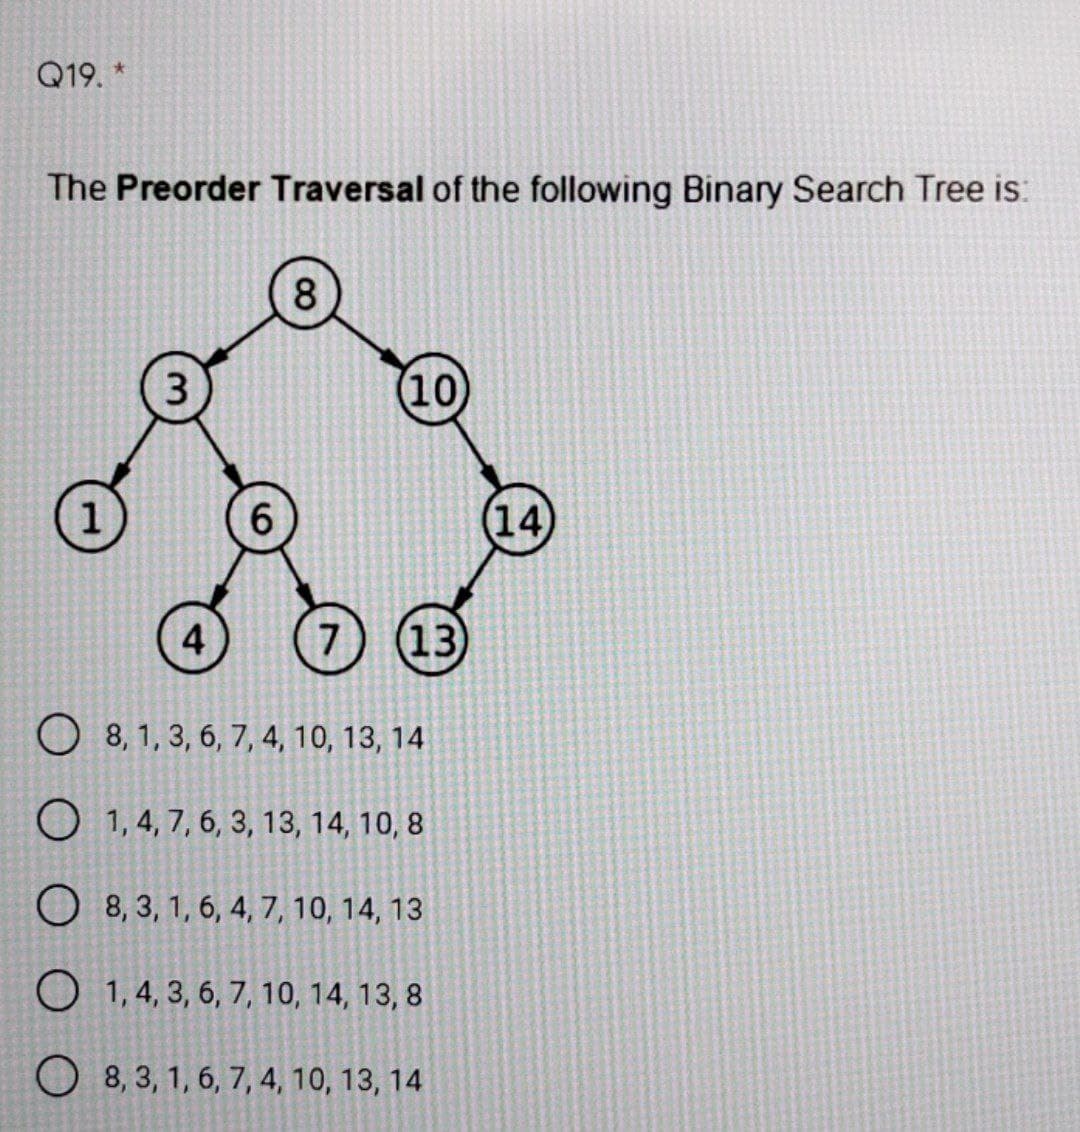 Q19. *
The Preorder Traversal of the following Binary Search Tree is:
8.
3
(10)
6.
(14)
4
7
(13
O 8, 1, 3, 6, 7, 4, 10, 13, 14
O 1, 4, 7, 6, 3, 13, 14, 10, 8
O 8, 3, 1, 6, 4, 7, 10, 14, 13
O 1, 4, 3, 6, 7, 10, 14, 13, 8
O 8, 3, 1, 6, 7, 4, 10, 13, 14
